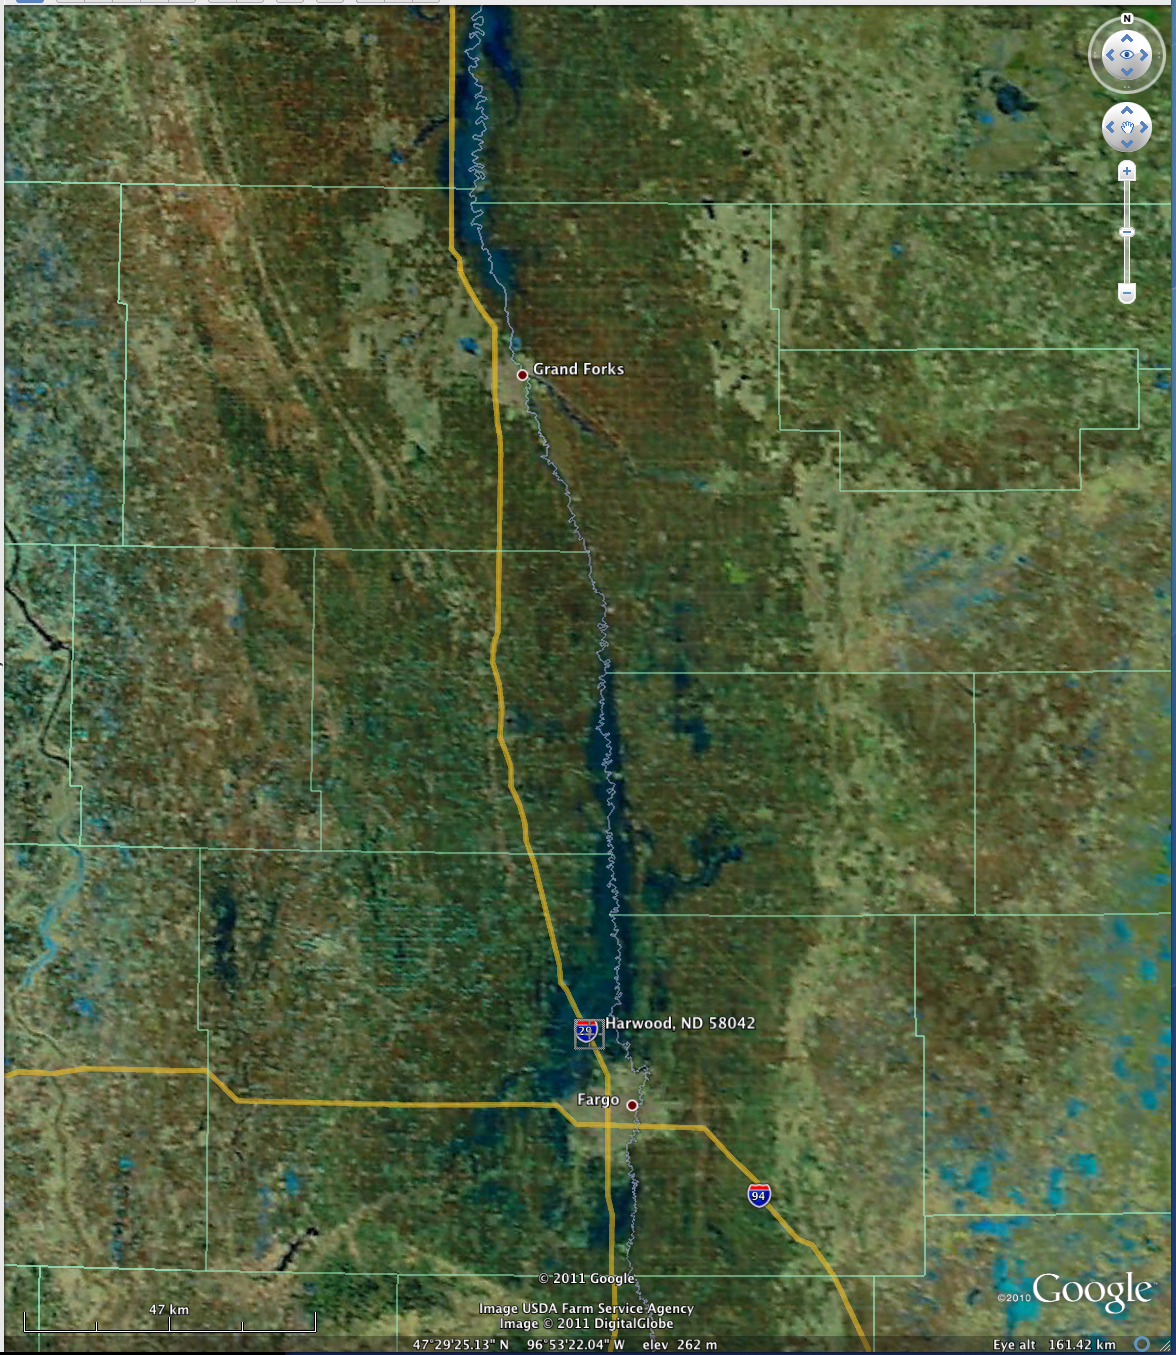 MODIS false color RGB image (displayed using Google Earth)